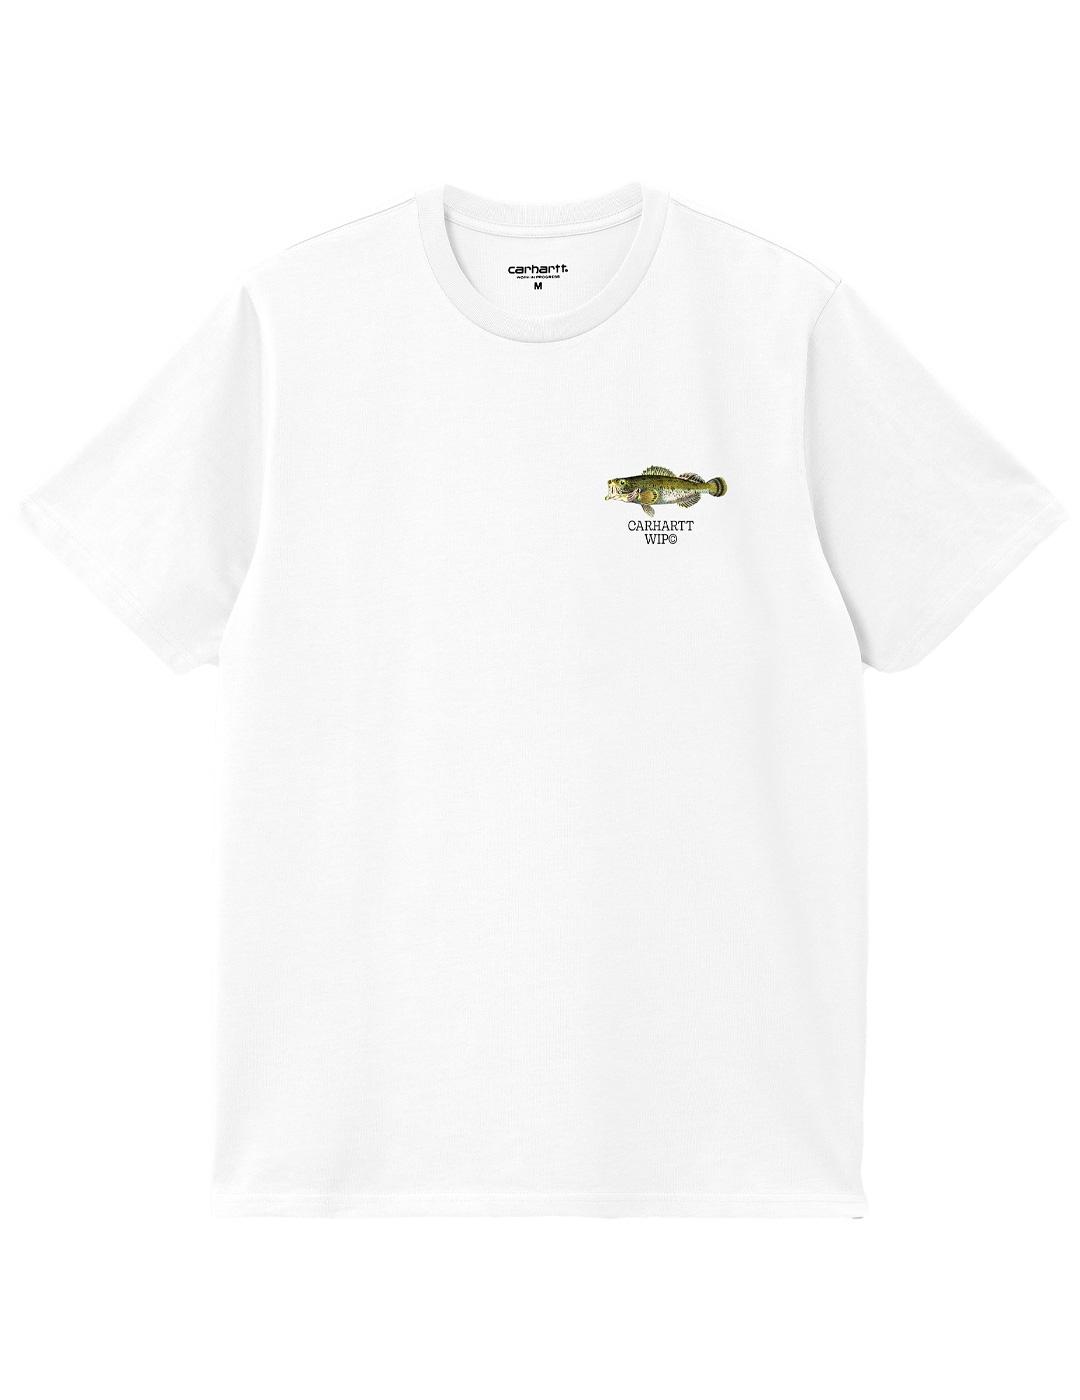 Camiseta Carhartt Wip Fish Blanco